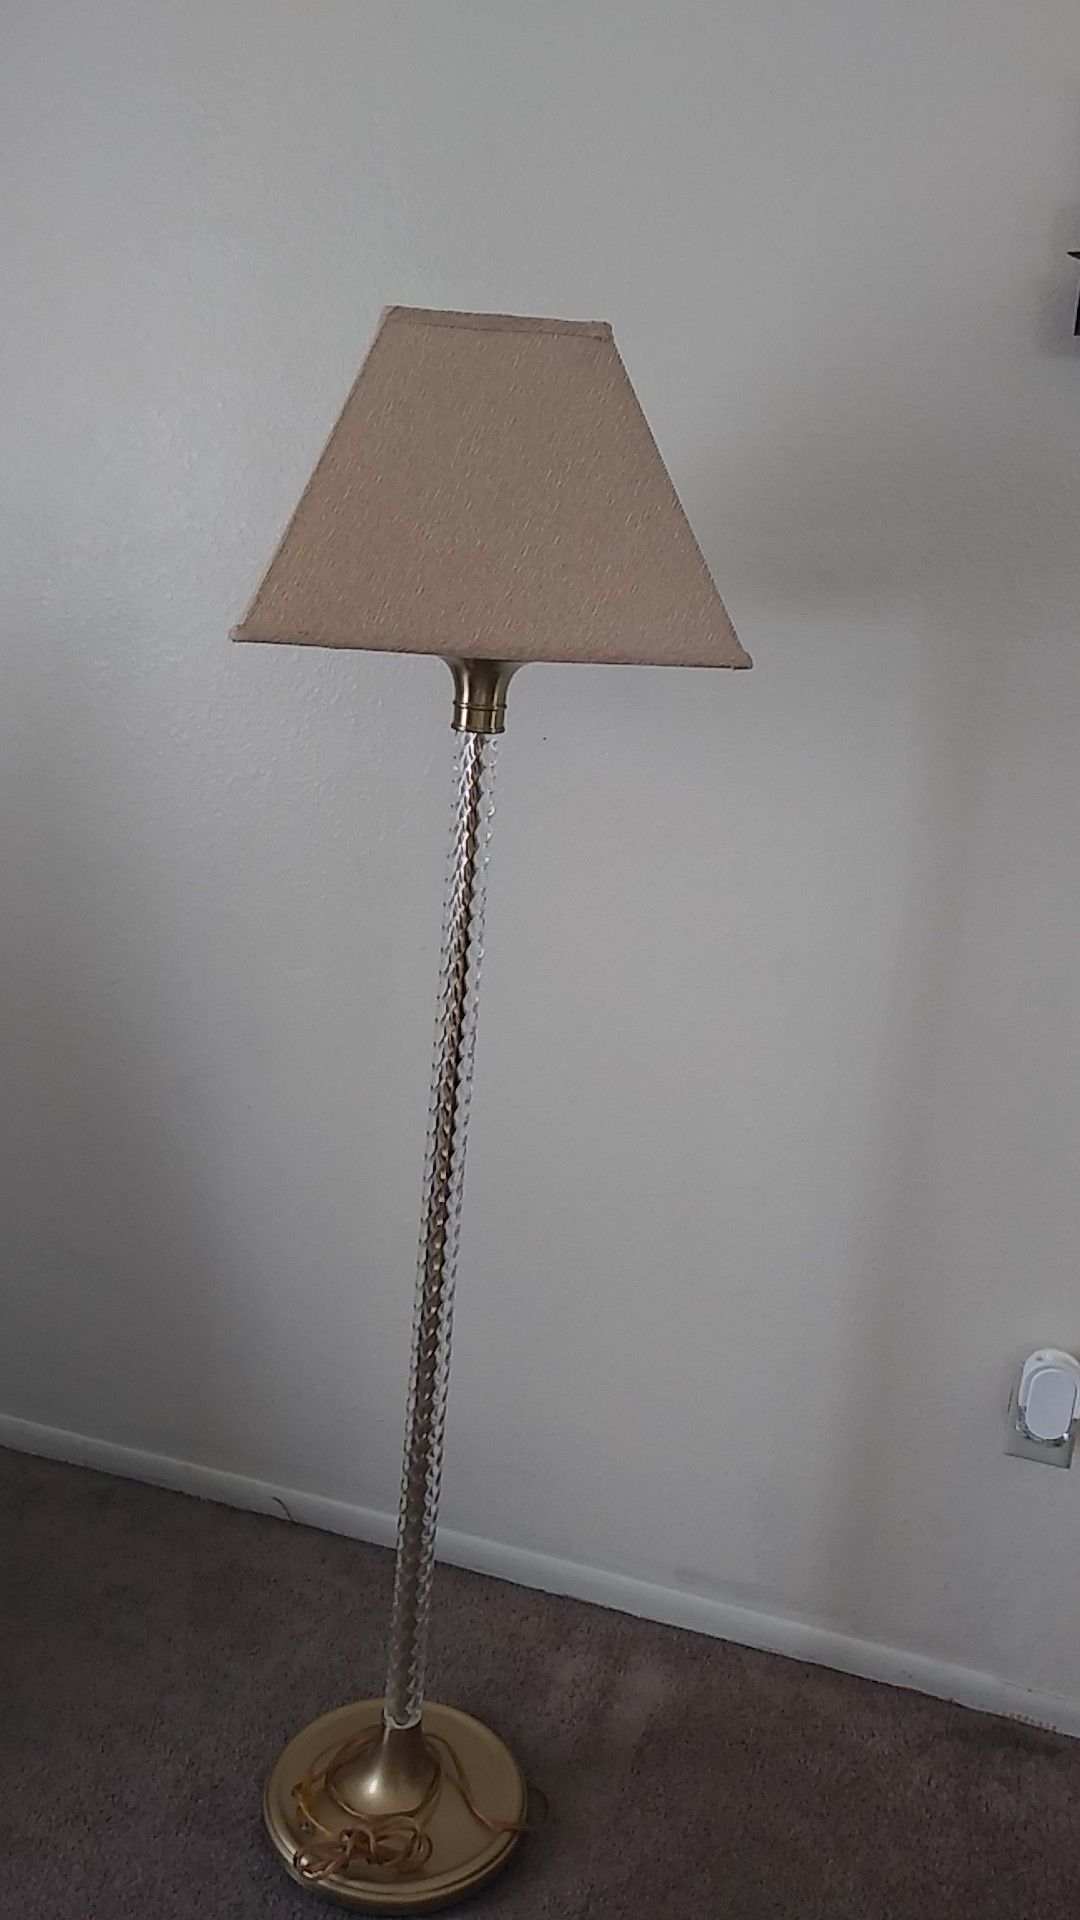 Floor lamp 5ft tall